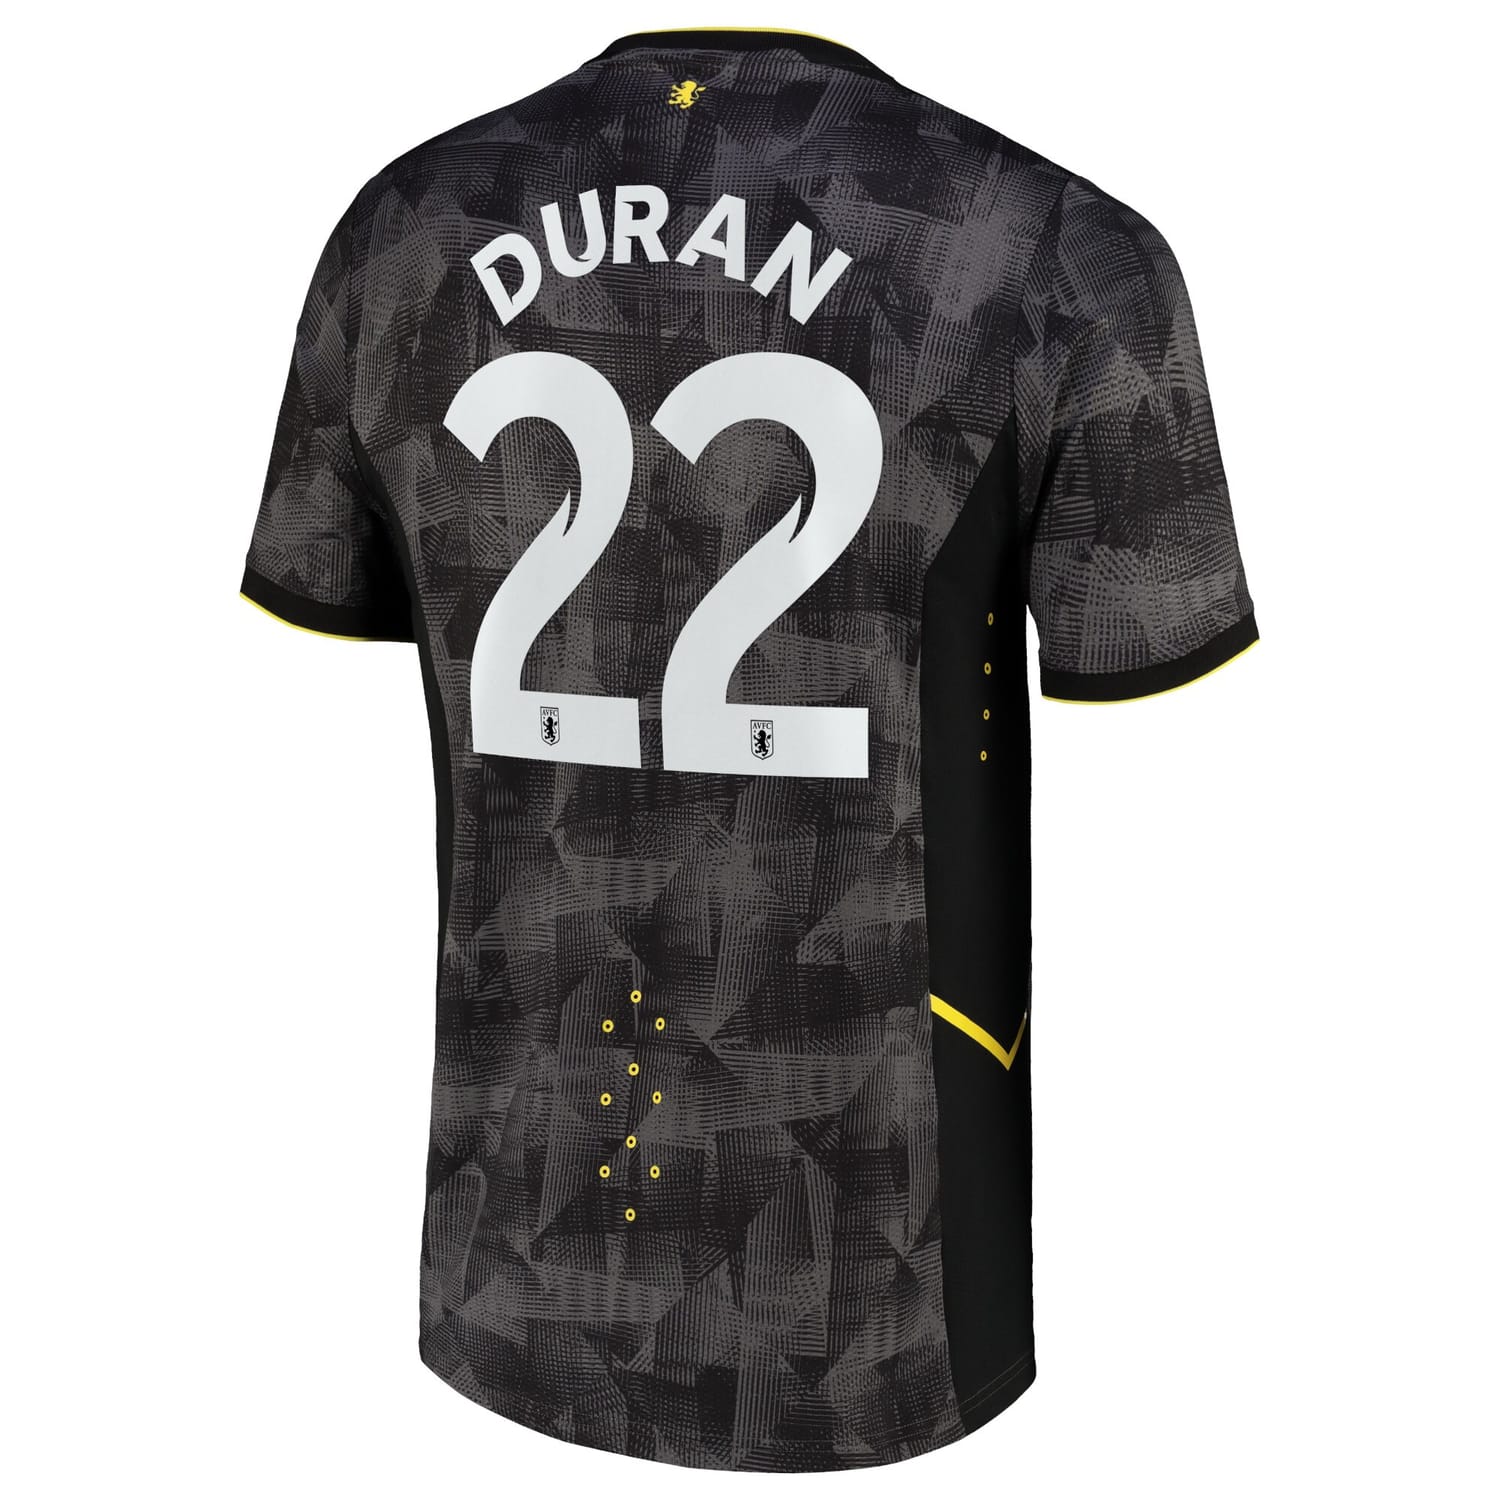 Premier League Aston Villa Third Cup Jersey Shirt 2022-23 player Duran 22 printing for Men